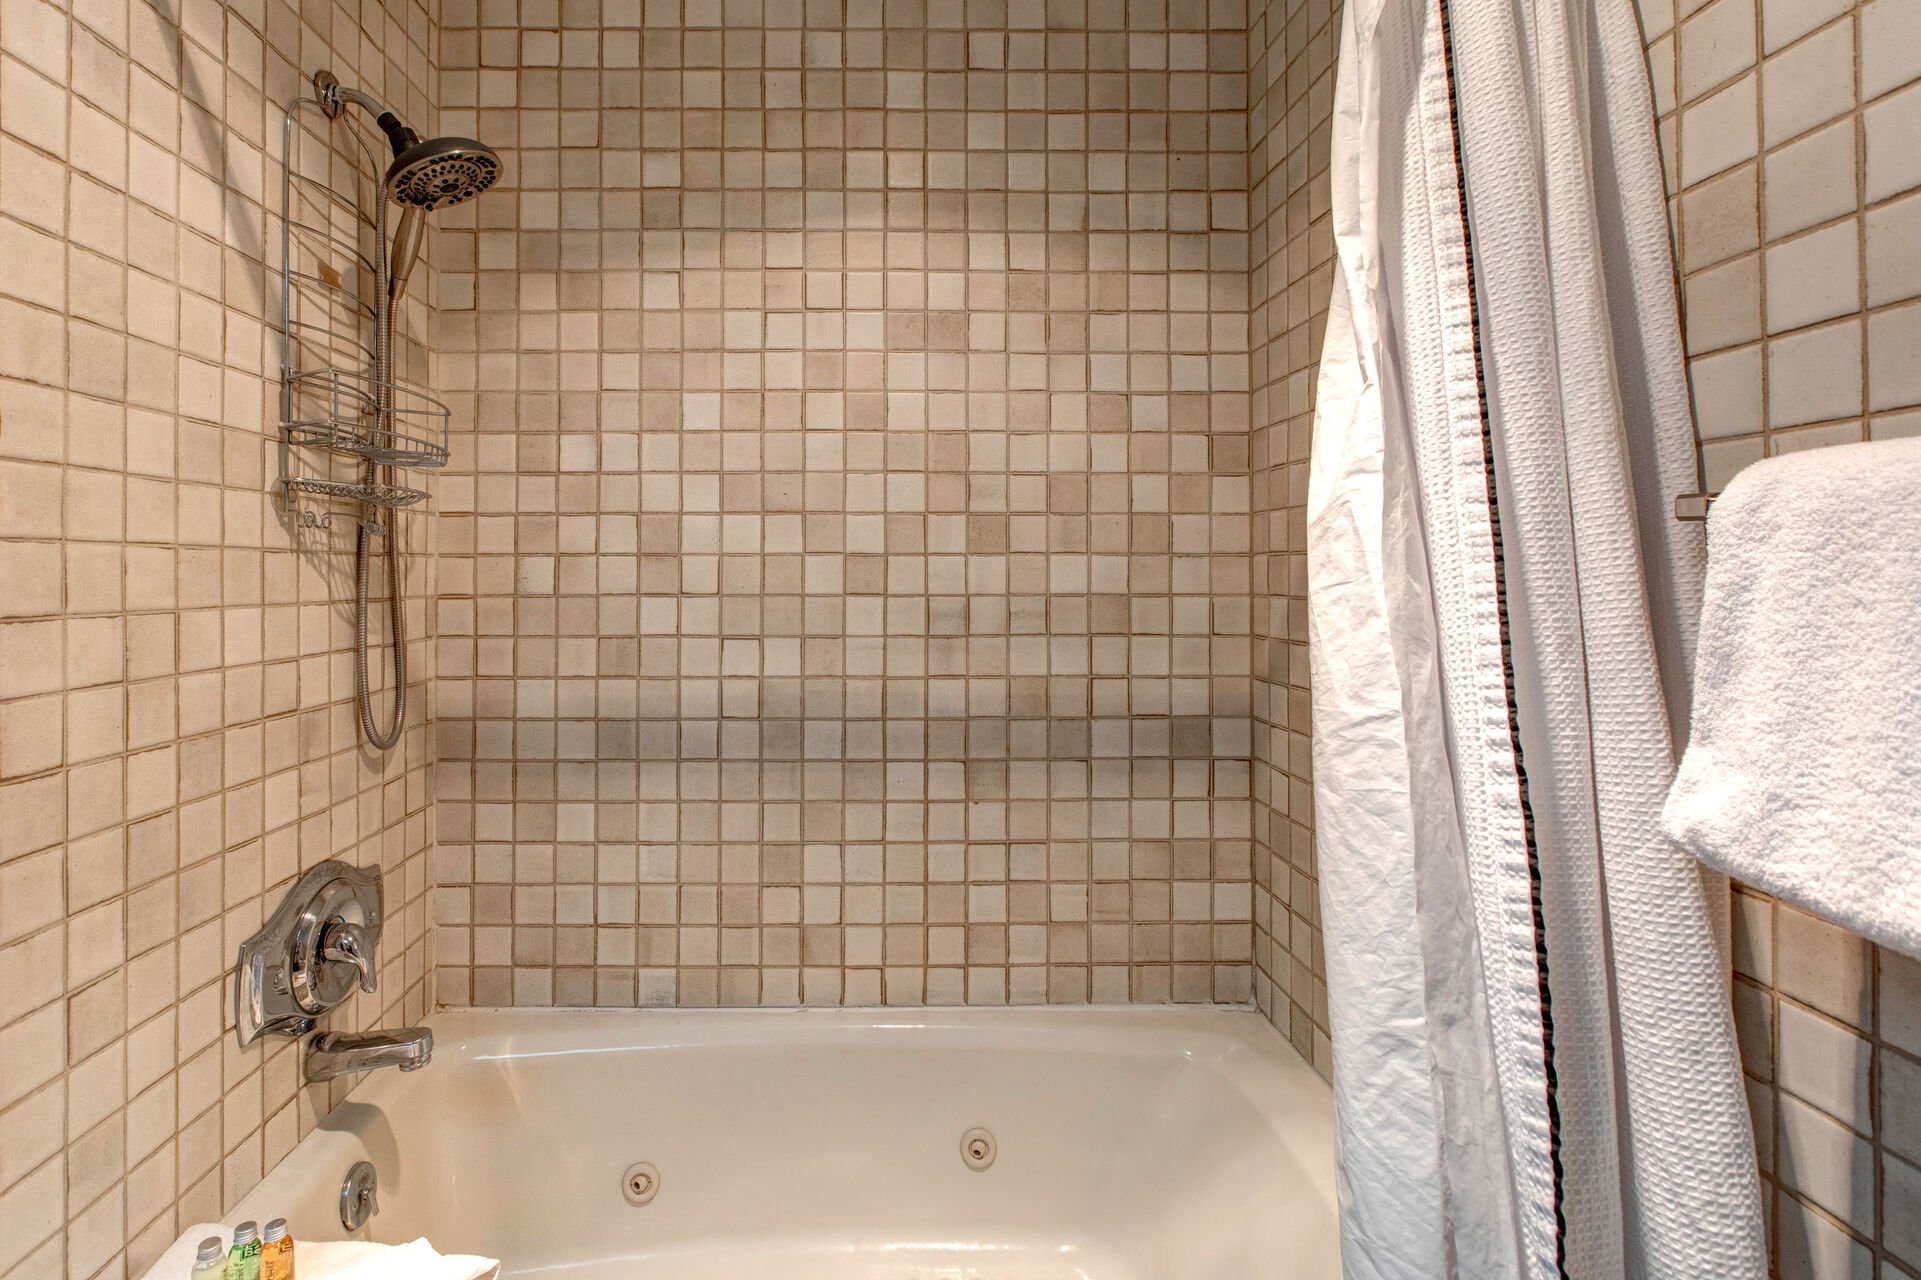 Bedroom 2 Bathroom with tub/shower combo